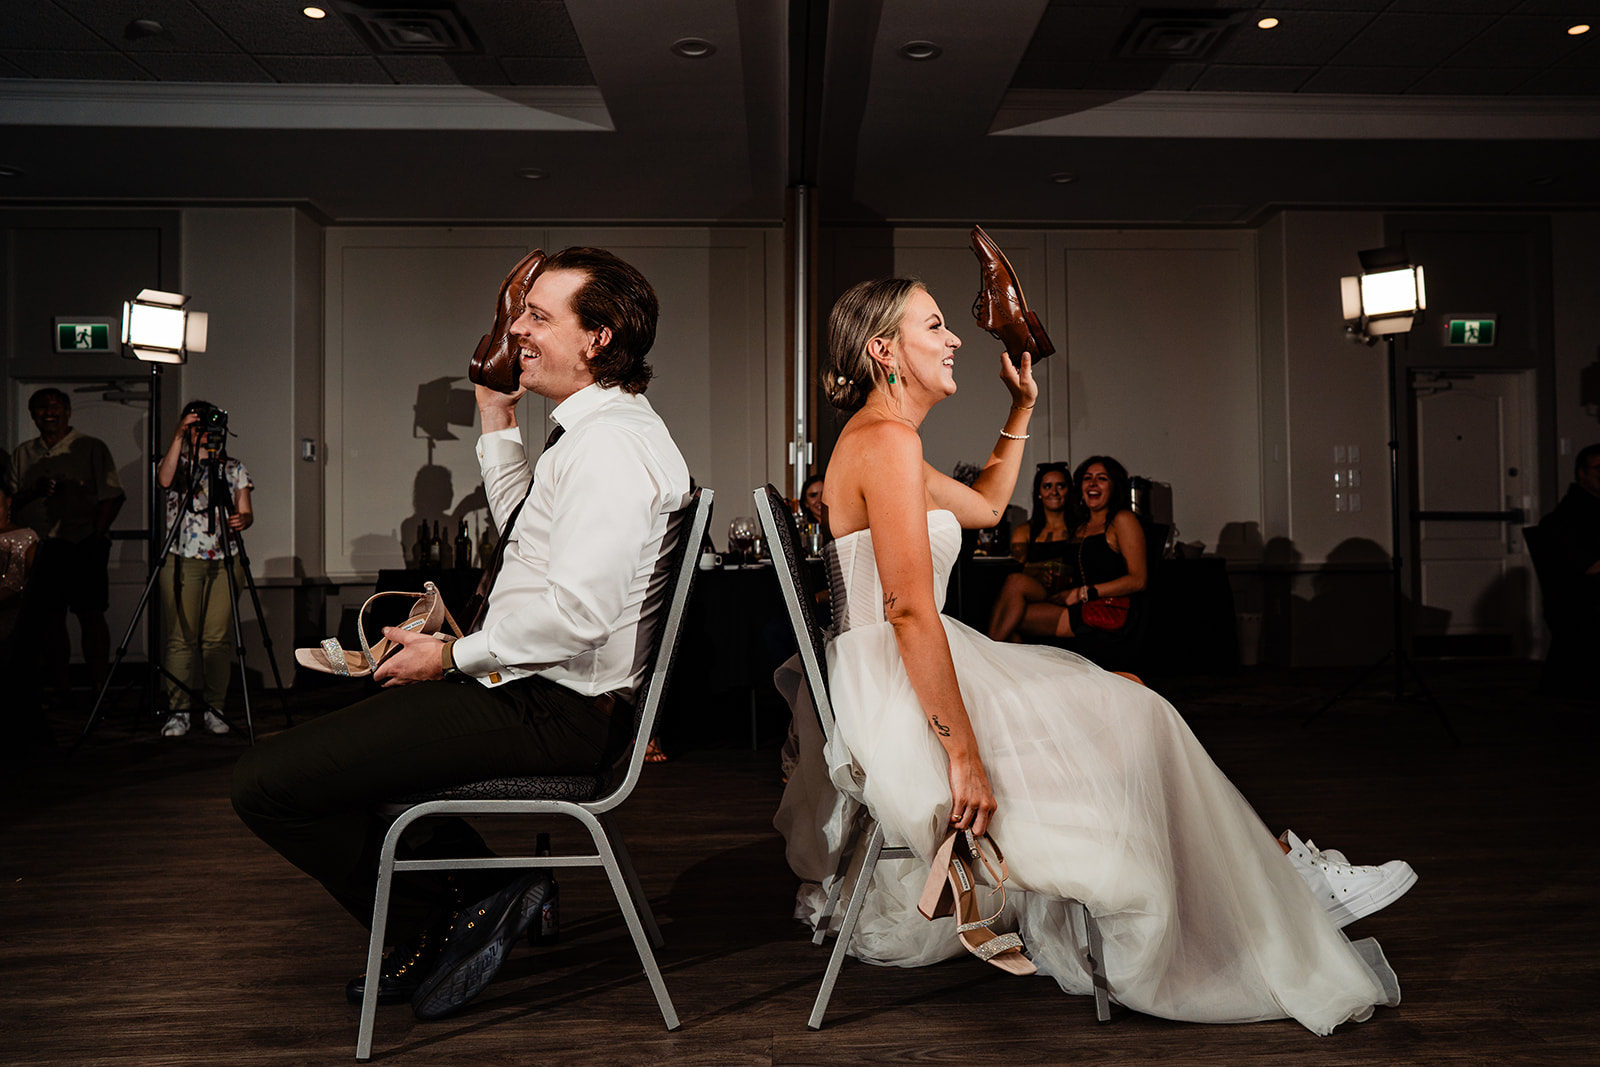 Canada day wedding, Nelson BC, Prestige Lakeside Resort, BC Wedding Photographer